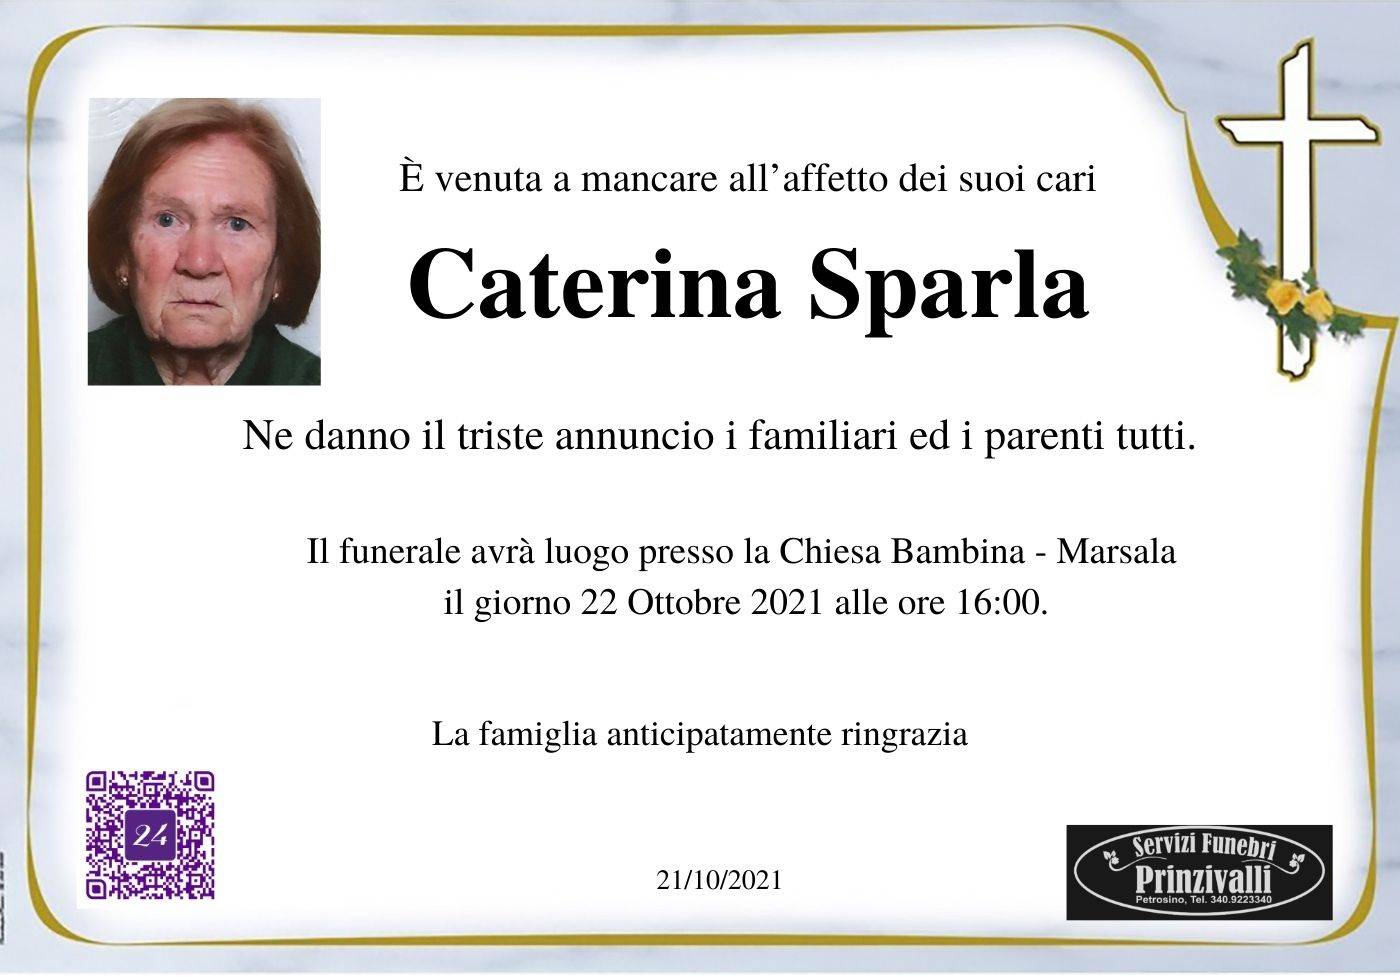 Caterina Sparla